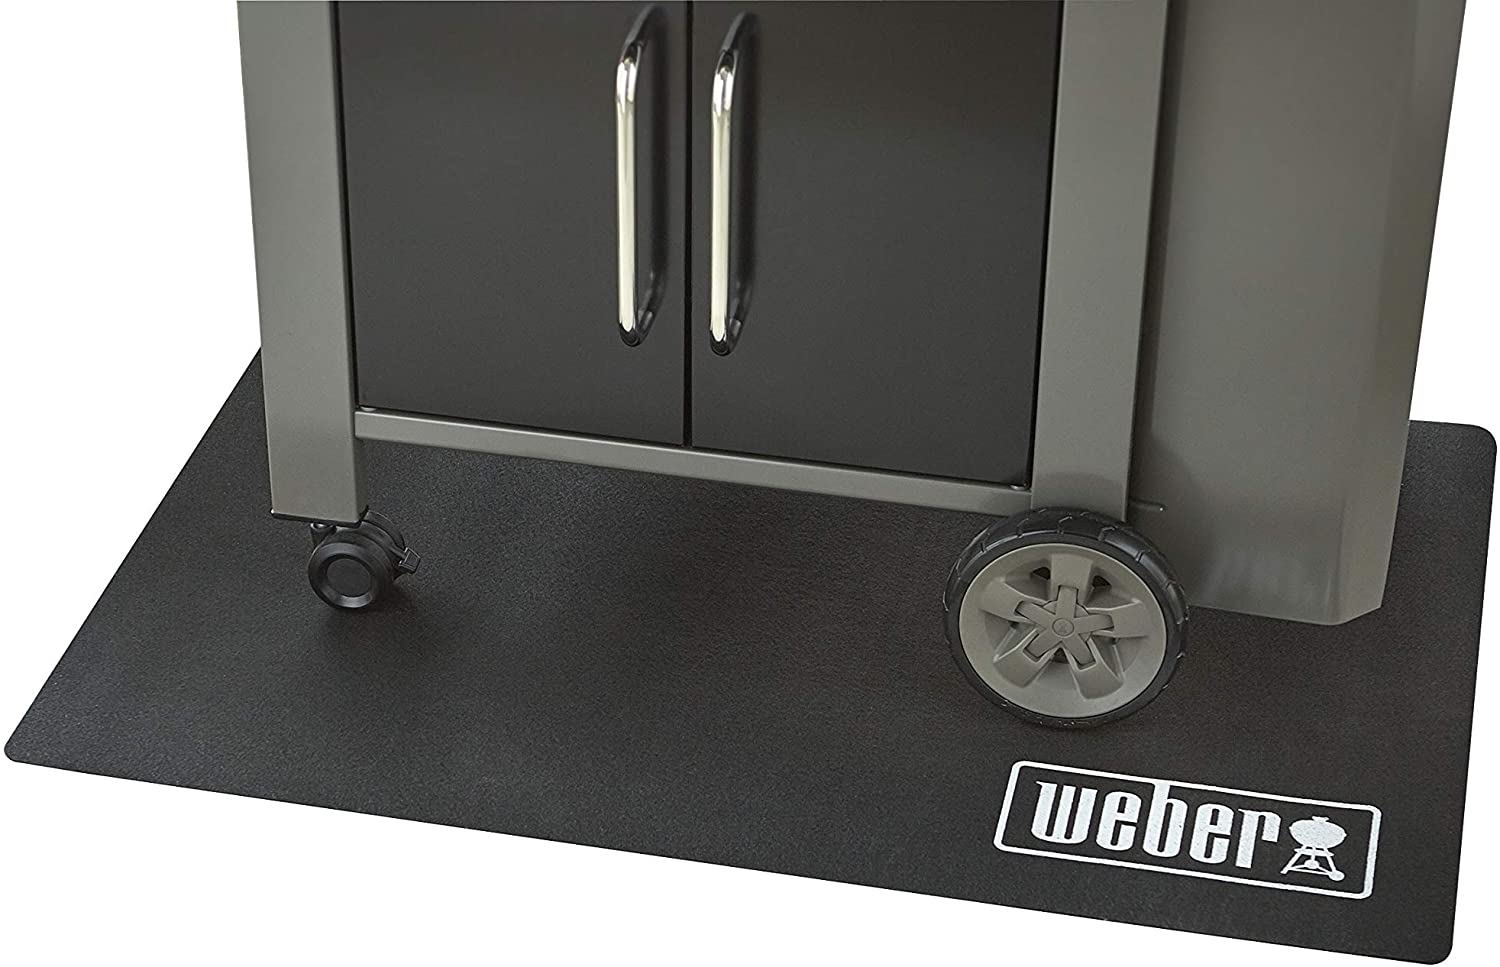 Weber 17897 Floor Protection Mat, Black